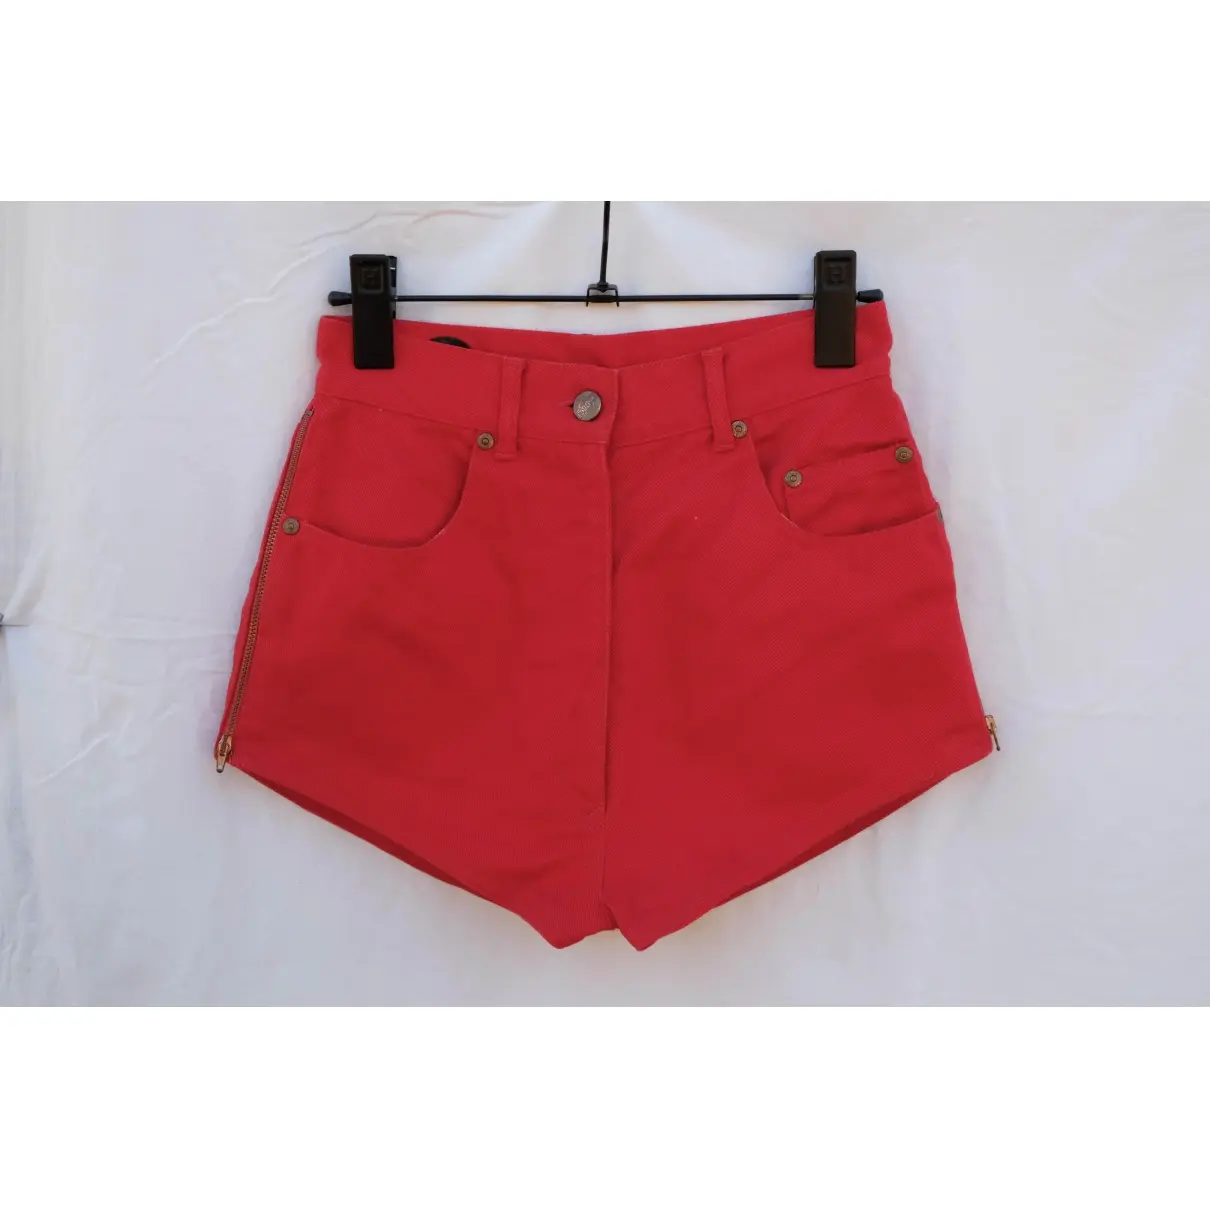 Red Denim - Jeans Shorts Jean Paul Gaultier - Vintage